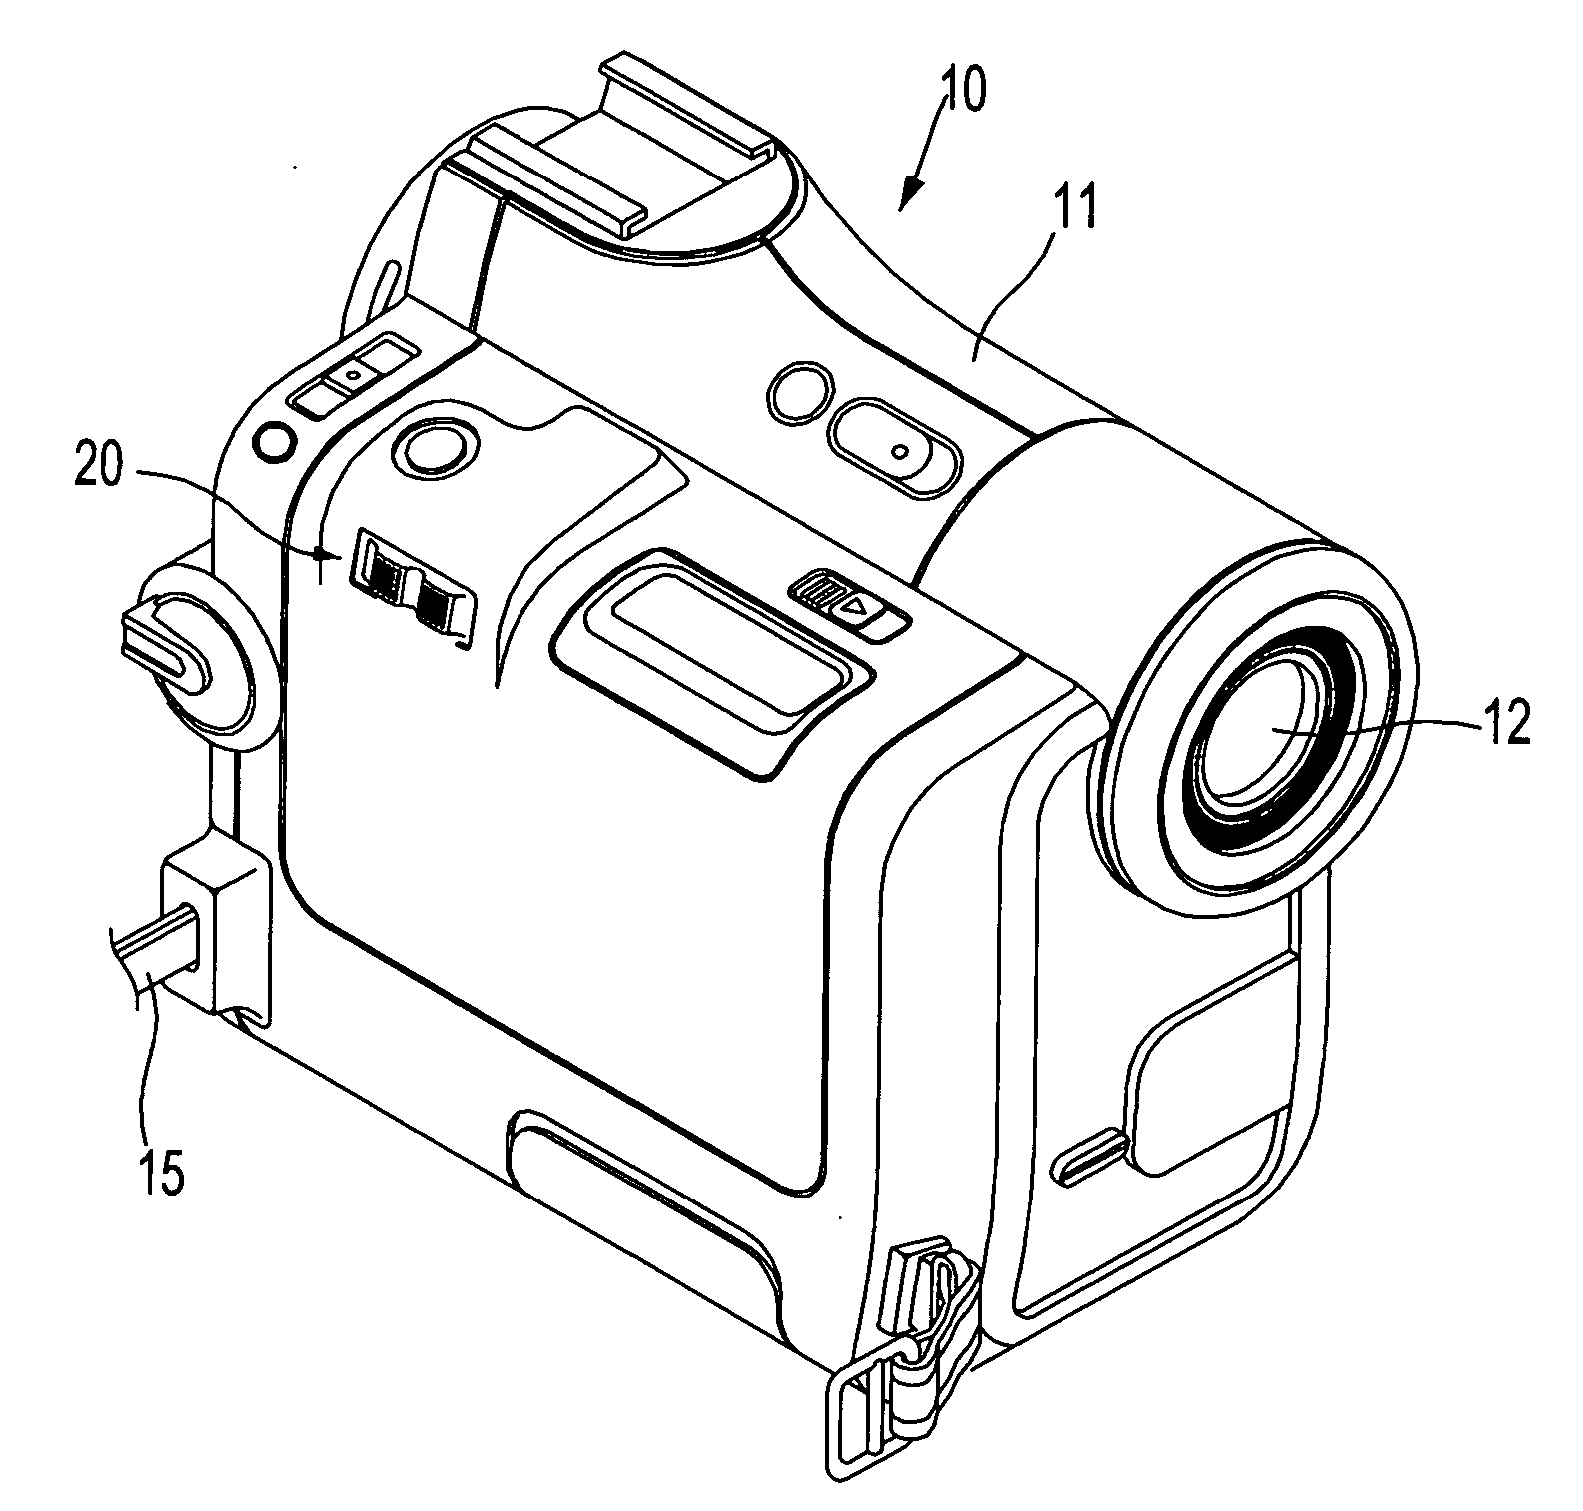 Image capturing device having zoom control unit